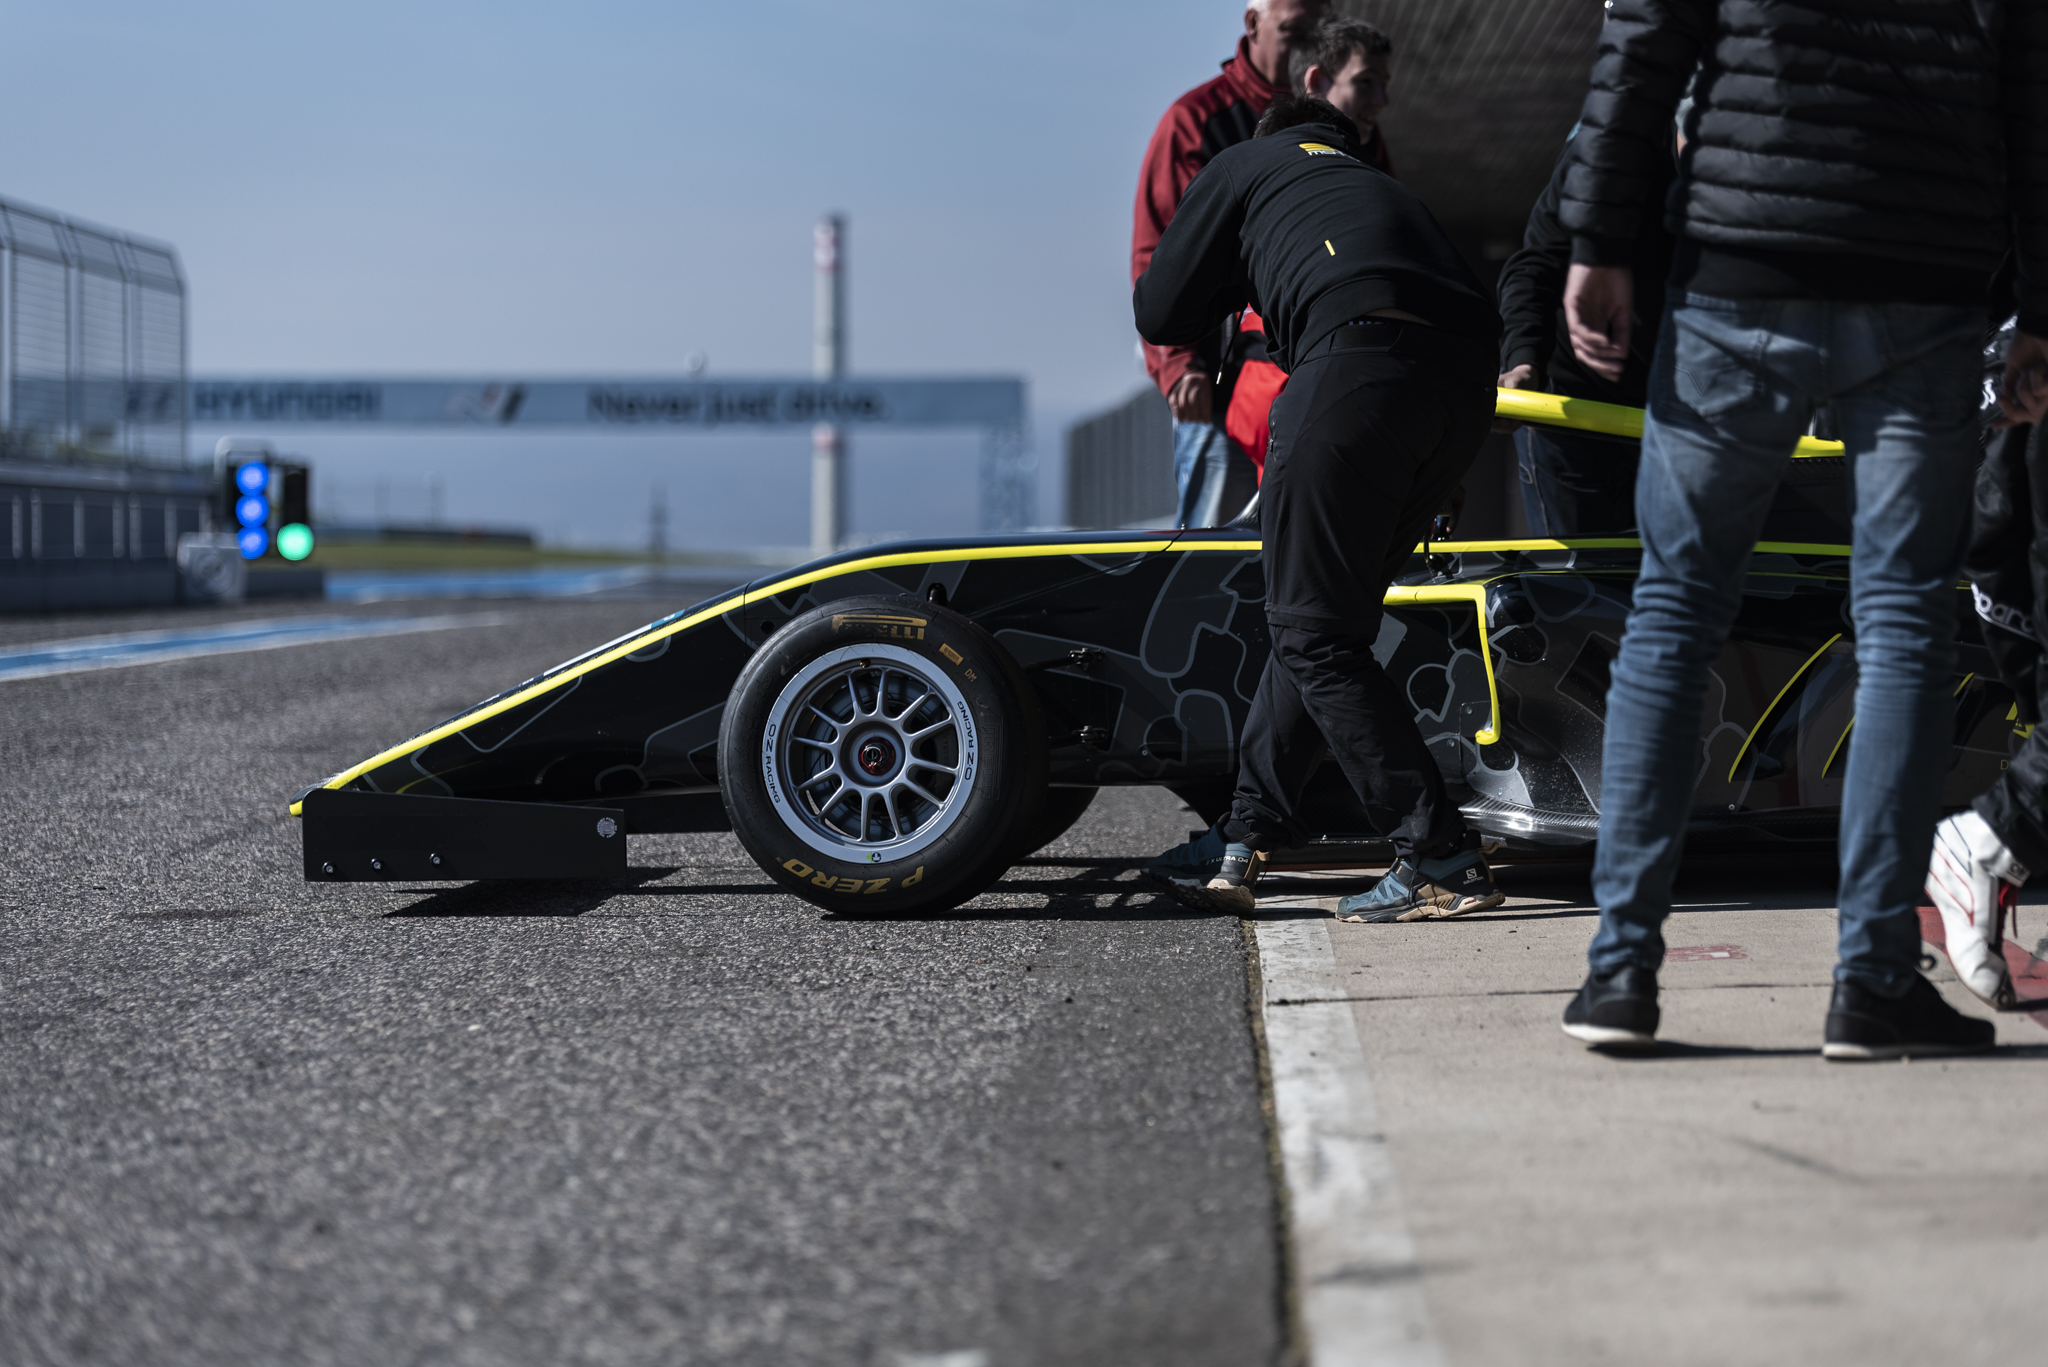 F4 CEZ Academy members head to Balaton Park to race and assist